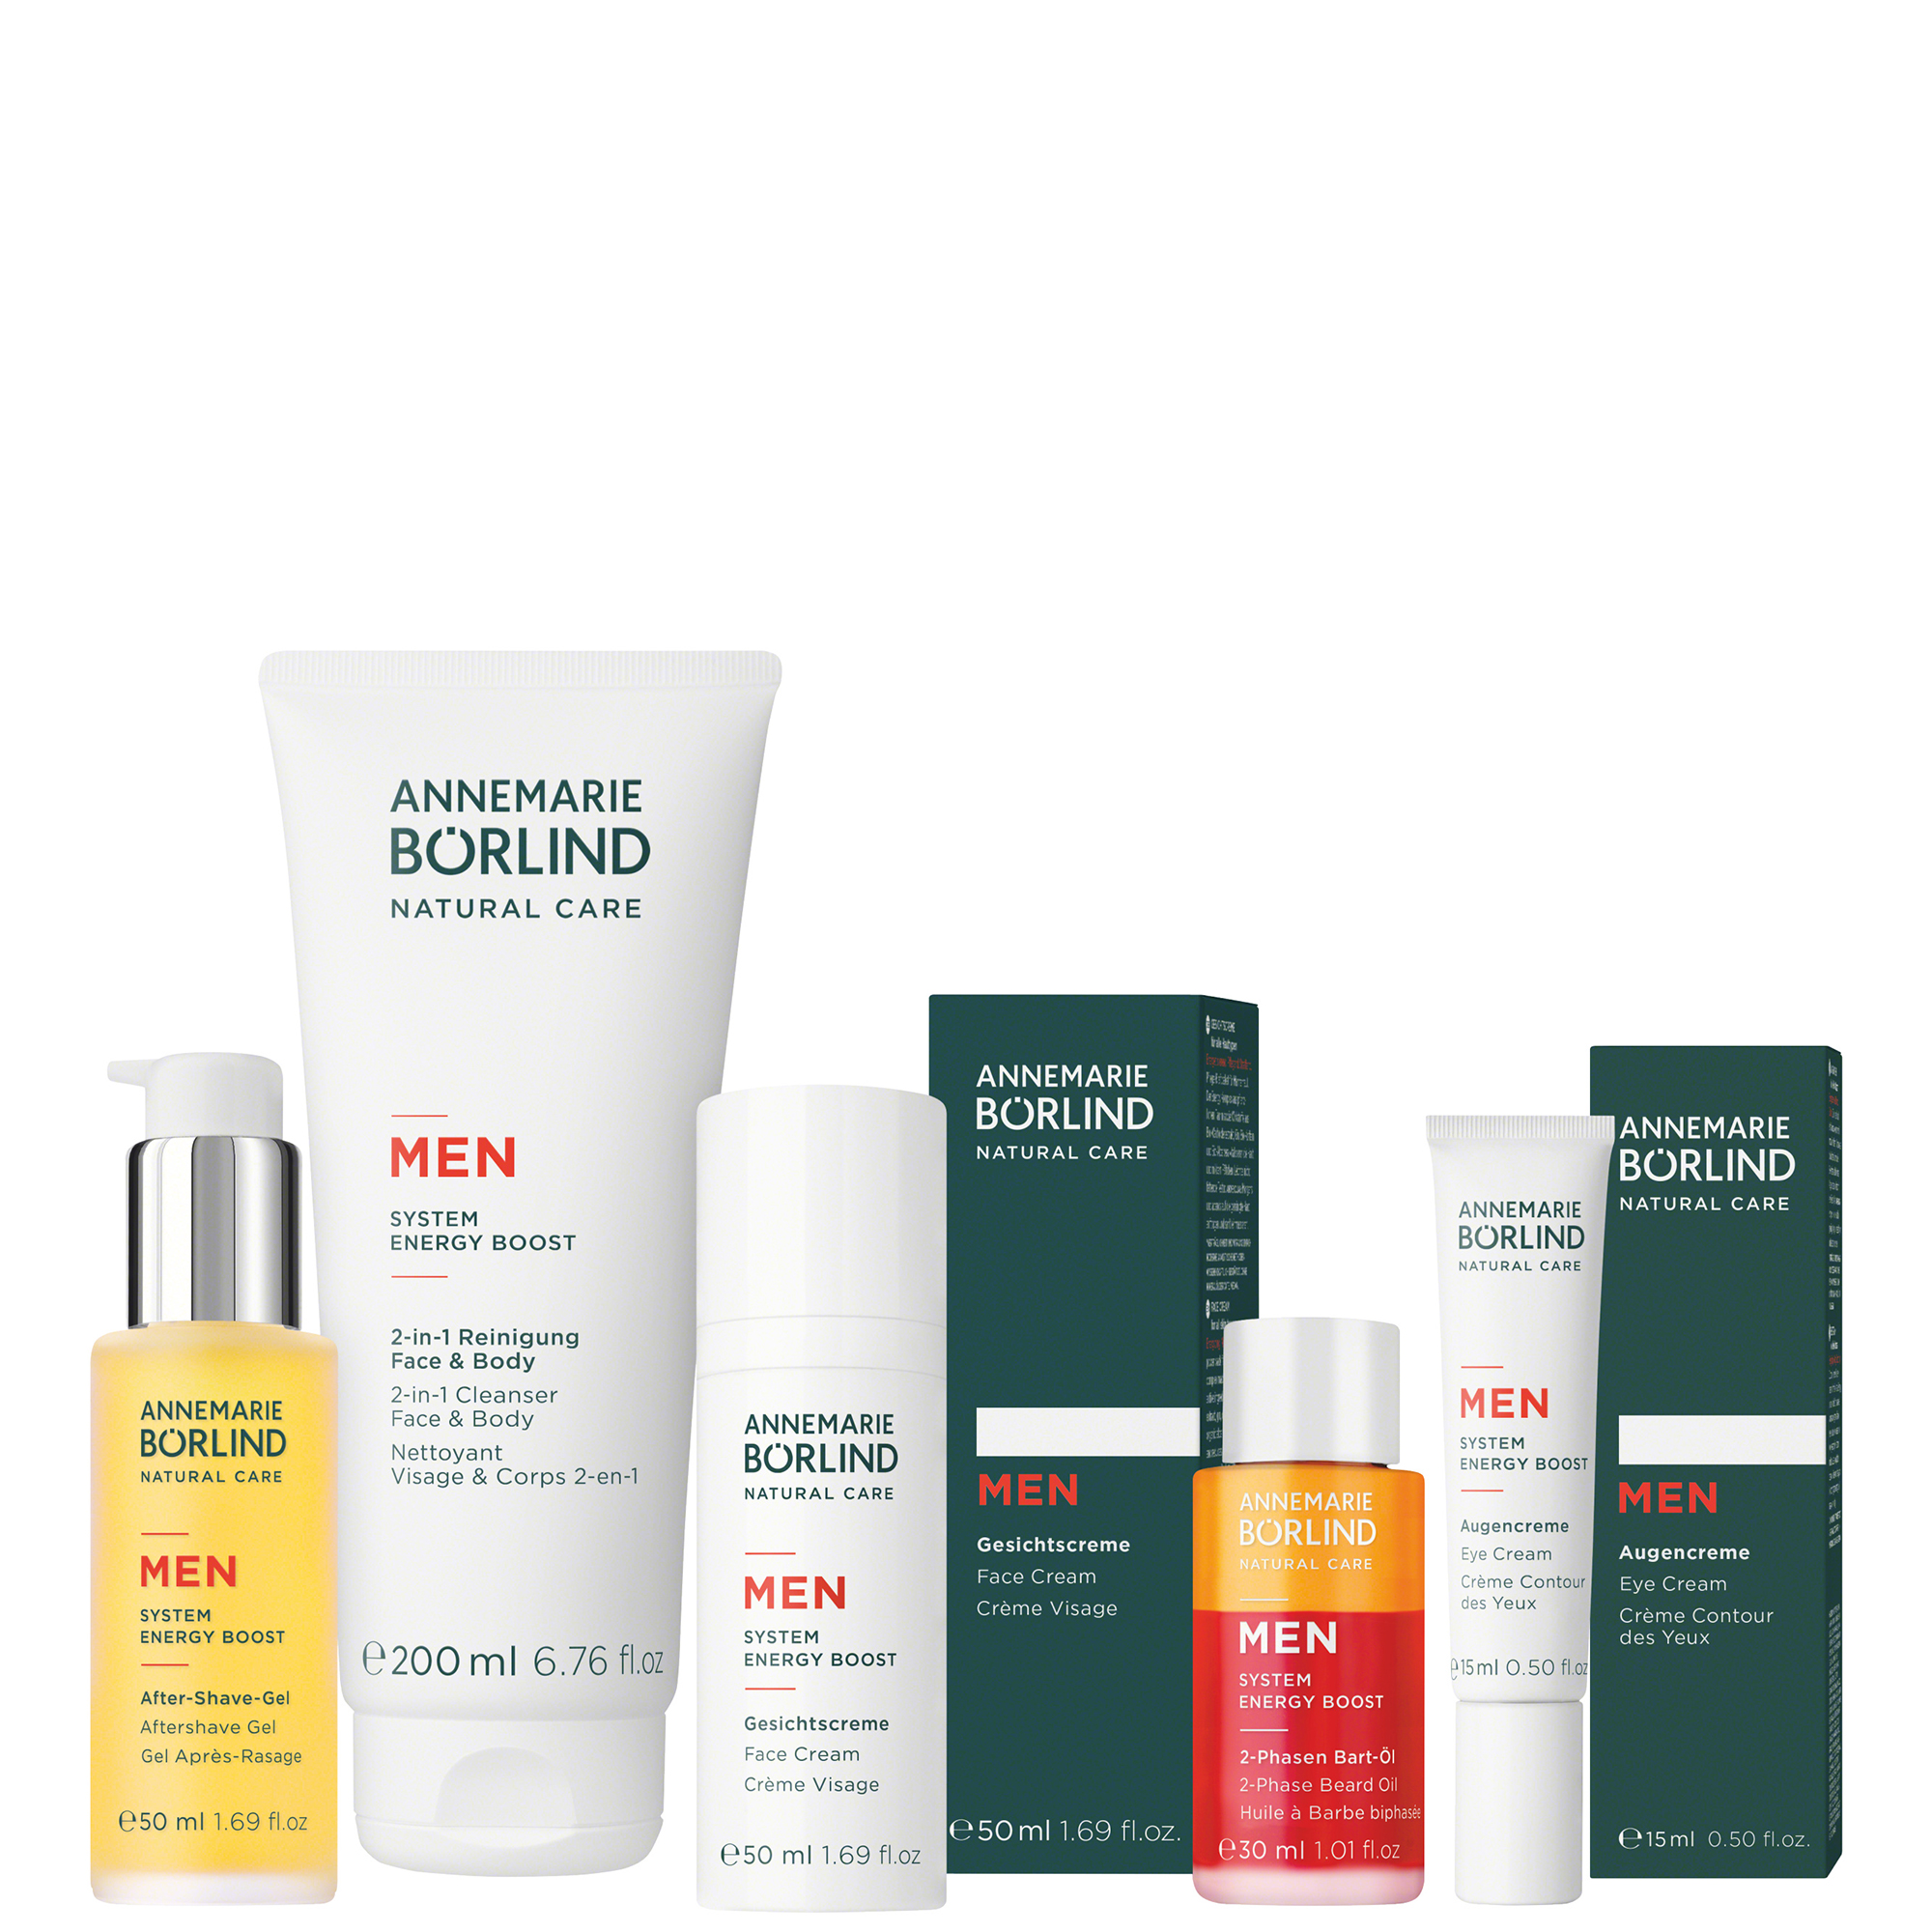 NEW IN THE SHOP: ANNEMARIE MEN Cosmetic News | Belladonna Naturkosmetik